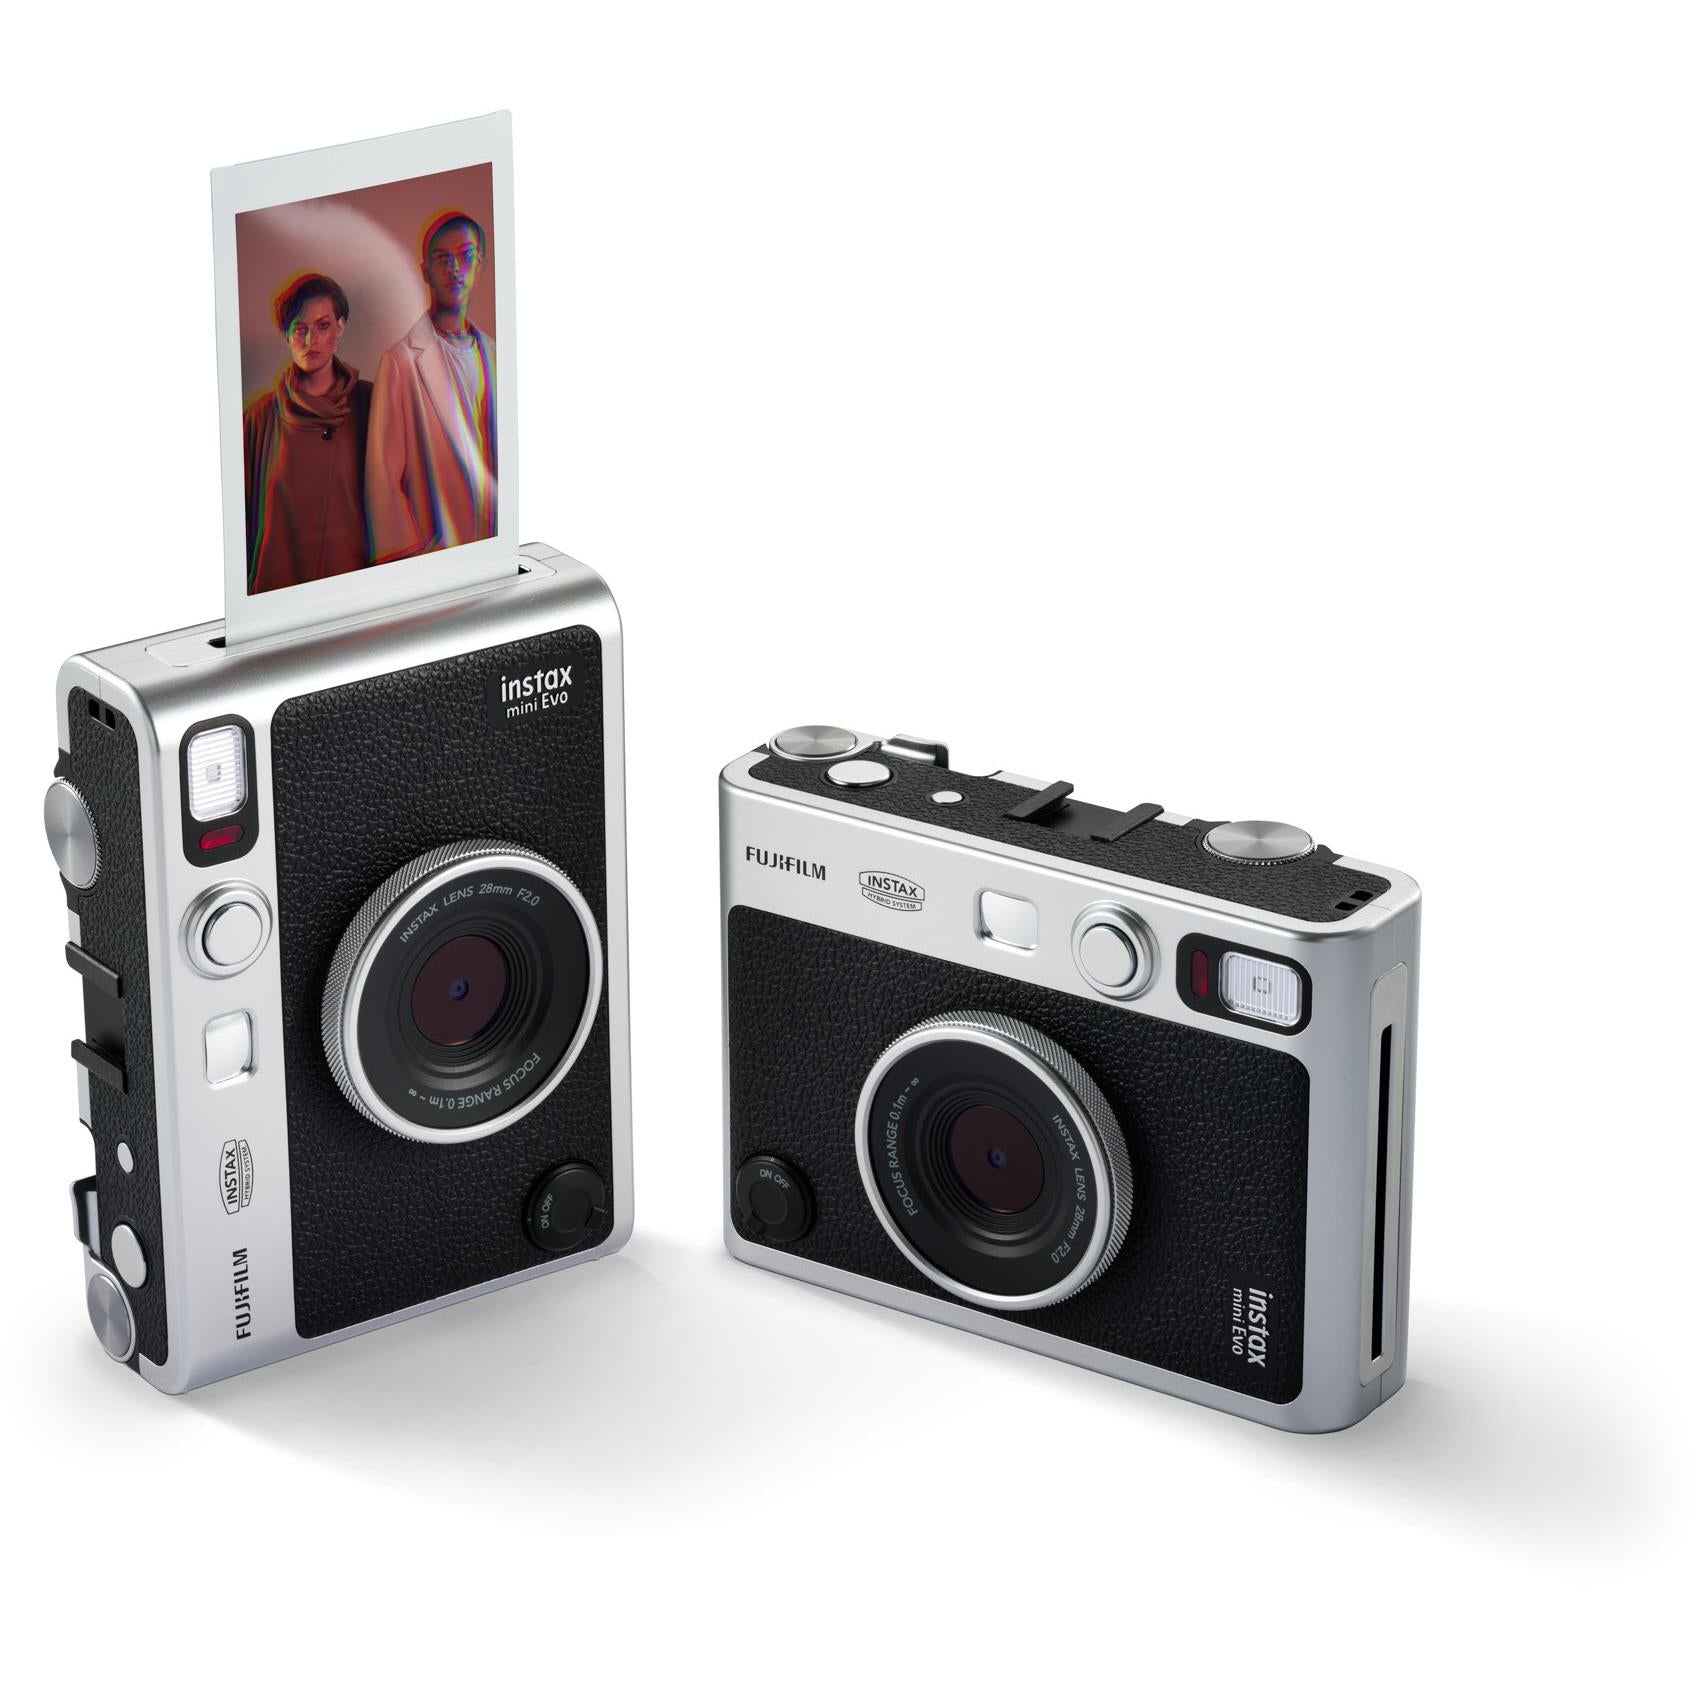 Fuji Instax Mini 8 Instant Film Camera Black with 10 Shots